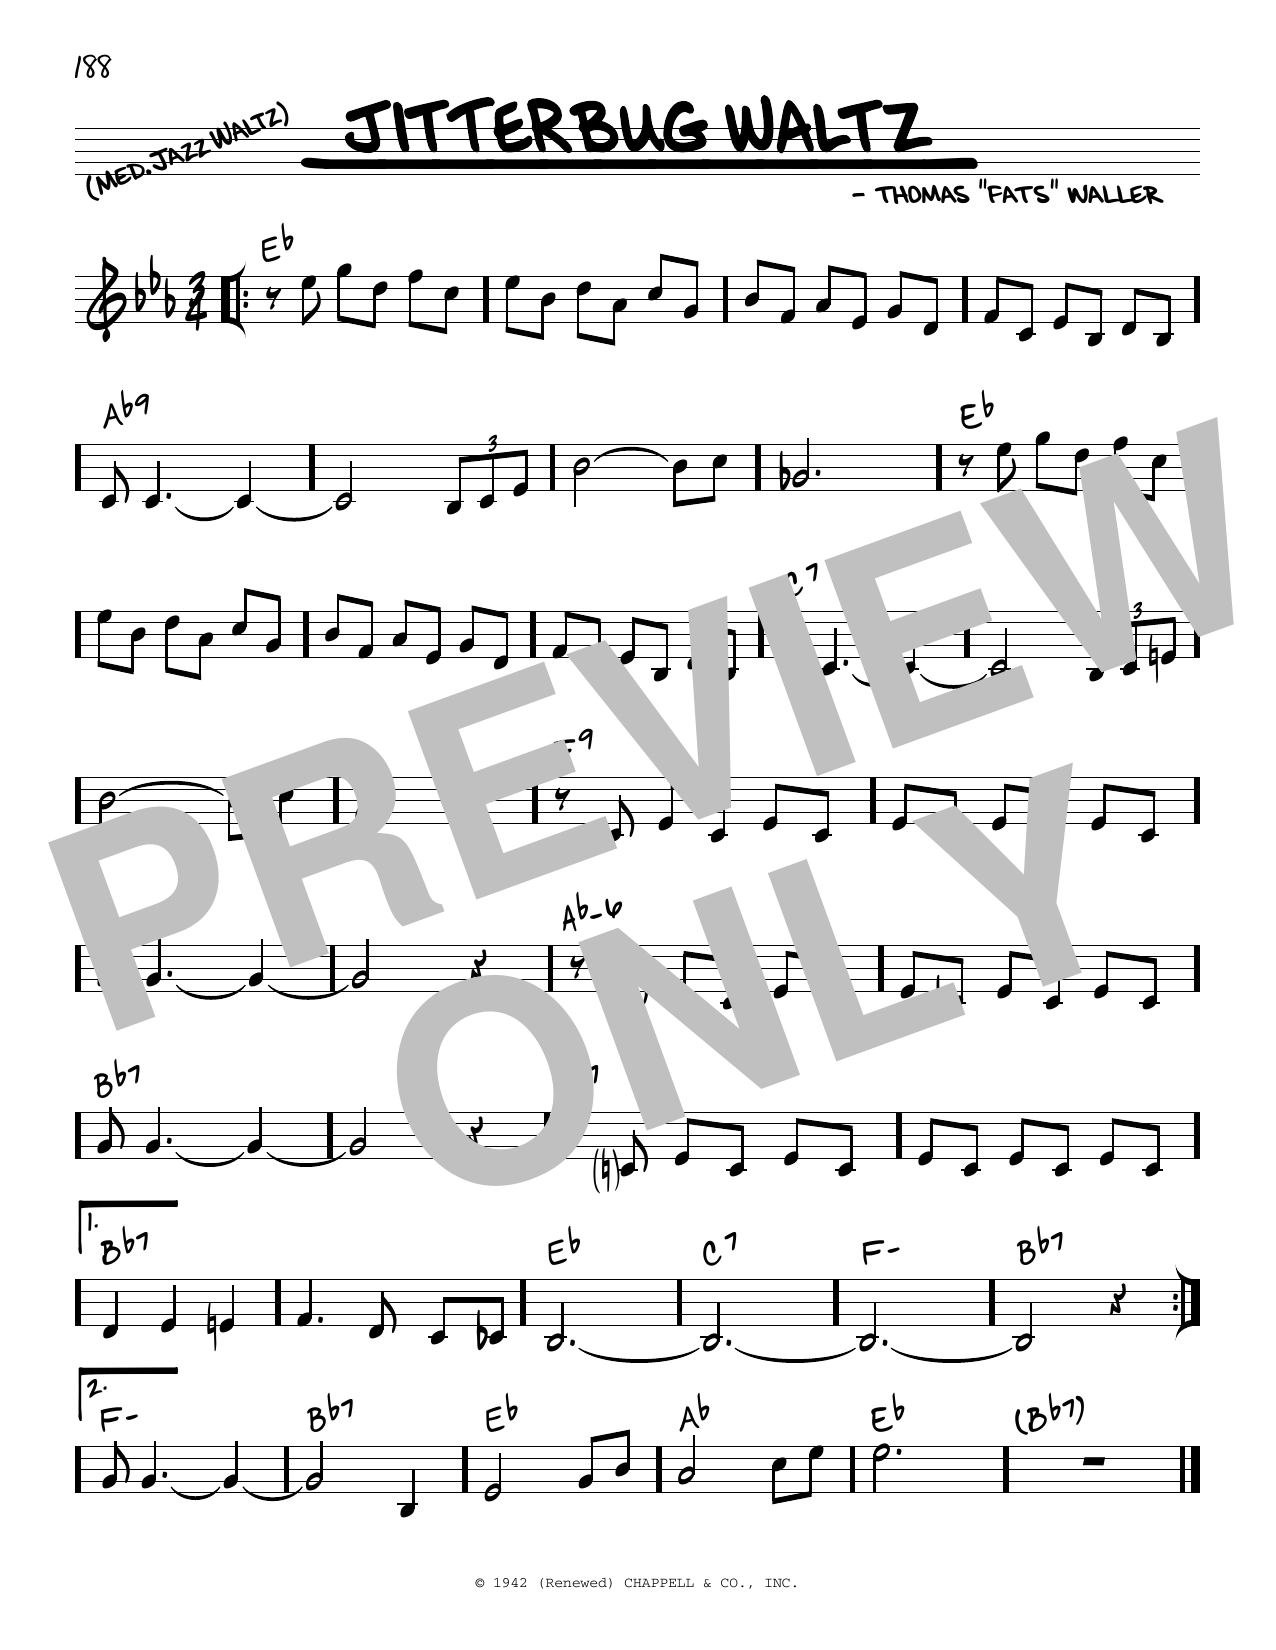 Fats Waller Jitterbug Waltz (arr. Robert Rawlins) Sheet Music Notes & Chords for Real Book – Melody, Lyrics & Chords - Download or Print PDF